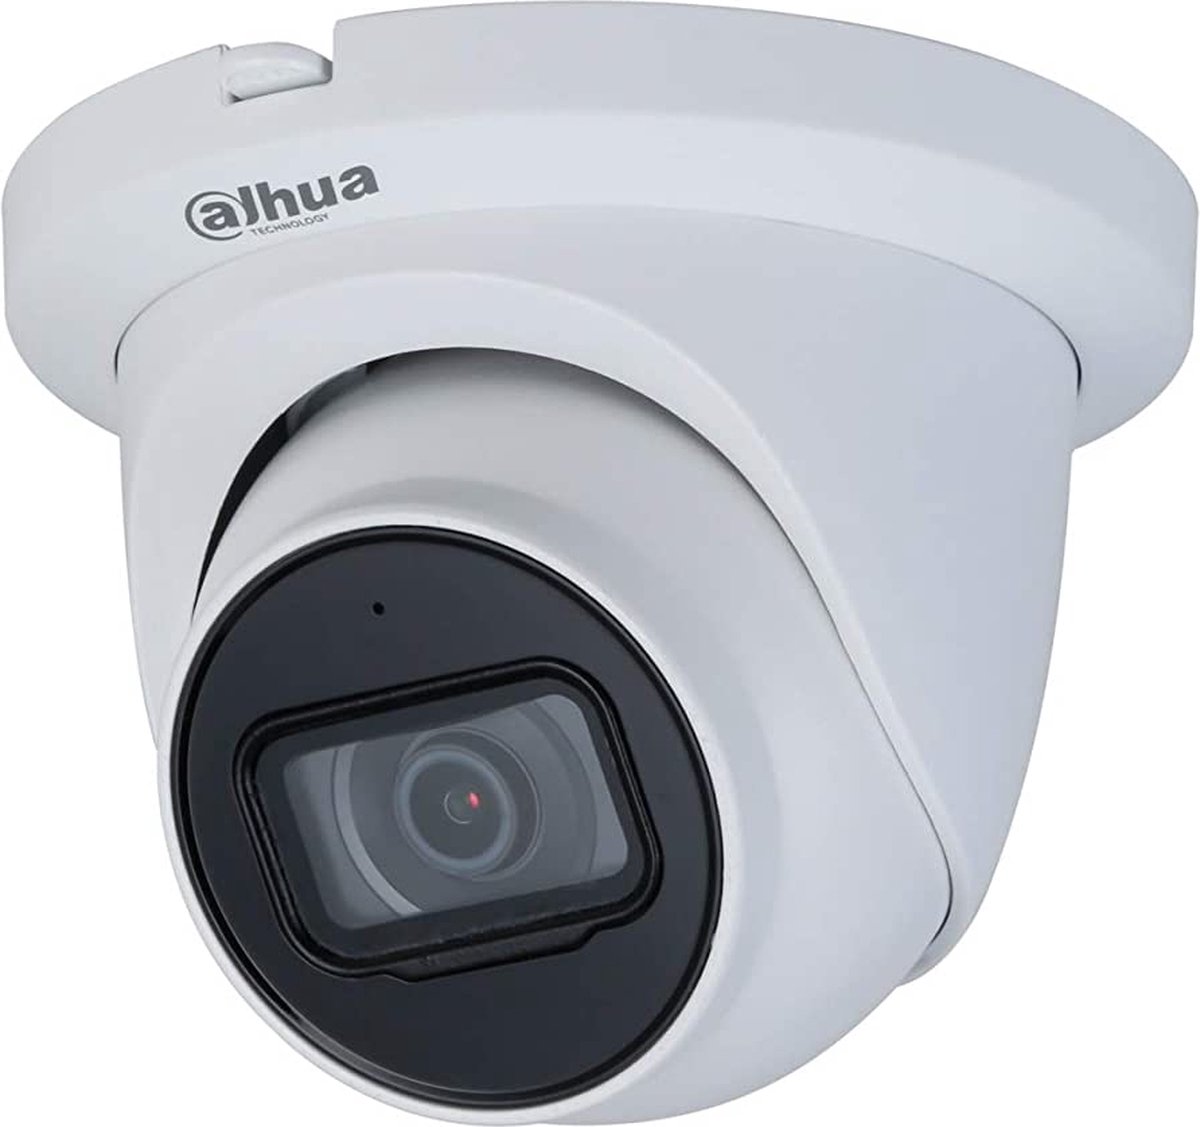 Dahua IPC-HDW2831TM-AS-S2 Ultra 4K HD 8MP Starlight buiten eyeball camera met POE, microfoon, IR nachtzicht, vaste lens en 120dB WDR - Beveiligingscamera IP camera bewakingscamera camerabewaking veiligheidscamera beveiliging netwerk camera webcam